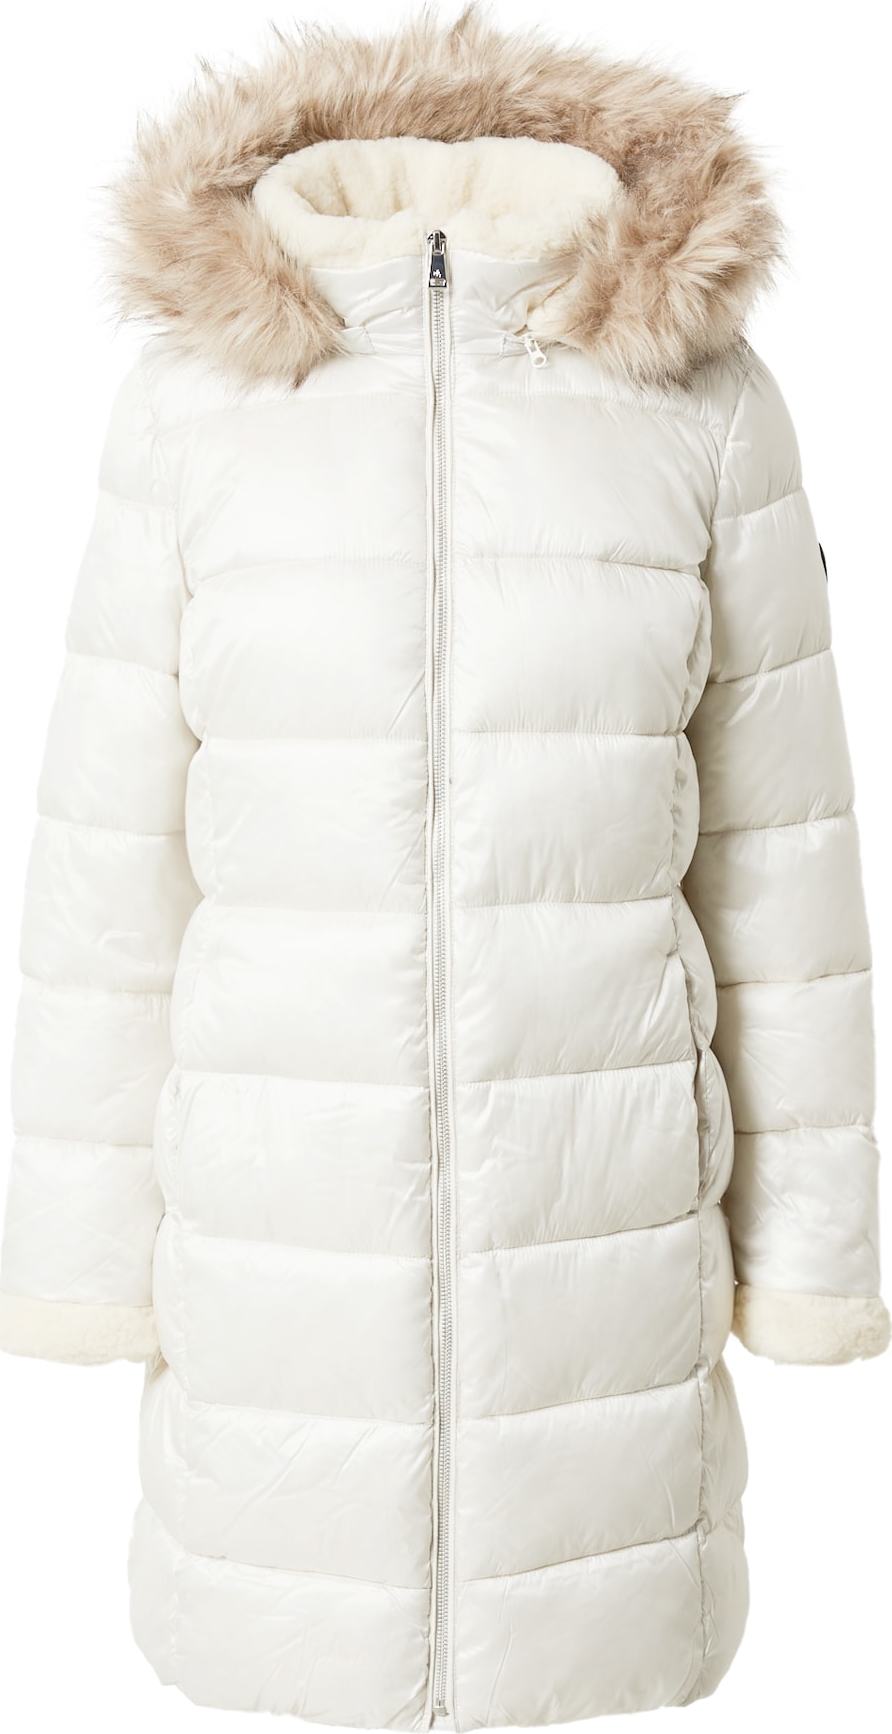 Lauren Ralph Lauren Zimní kabát krémová